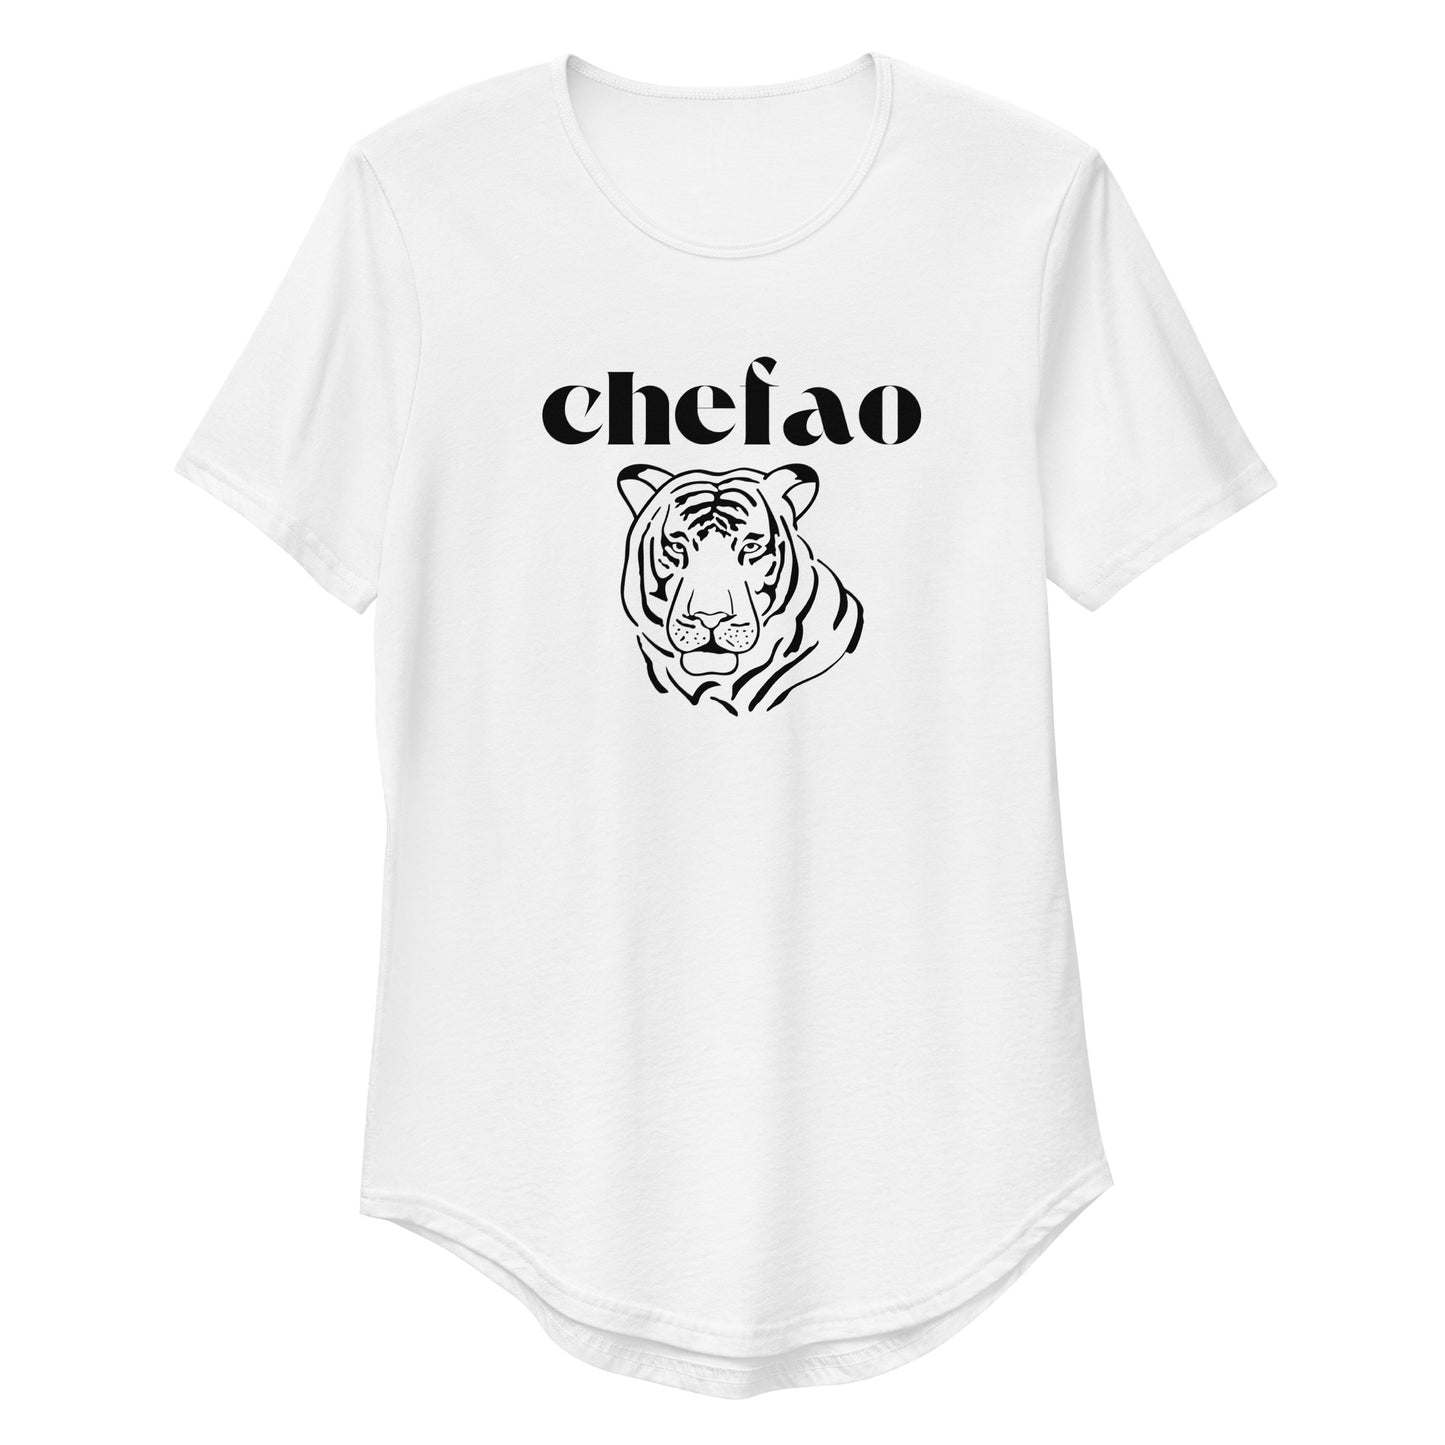 Chefao Tiger I, Men's Curved Hem T-Shirt